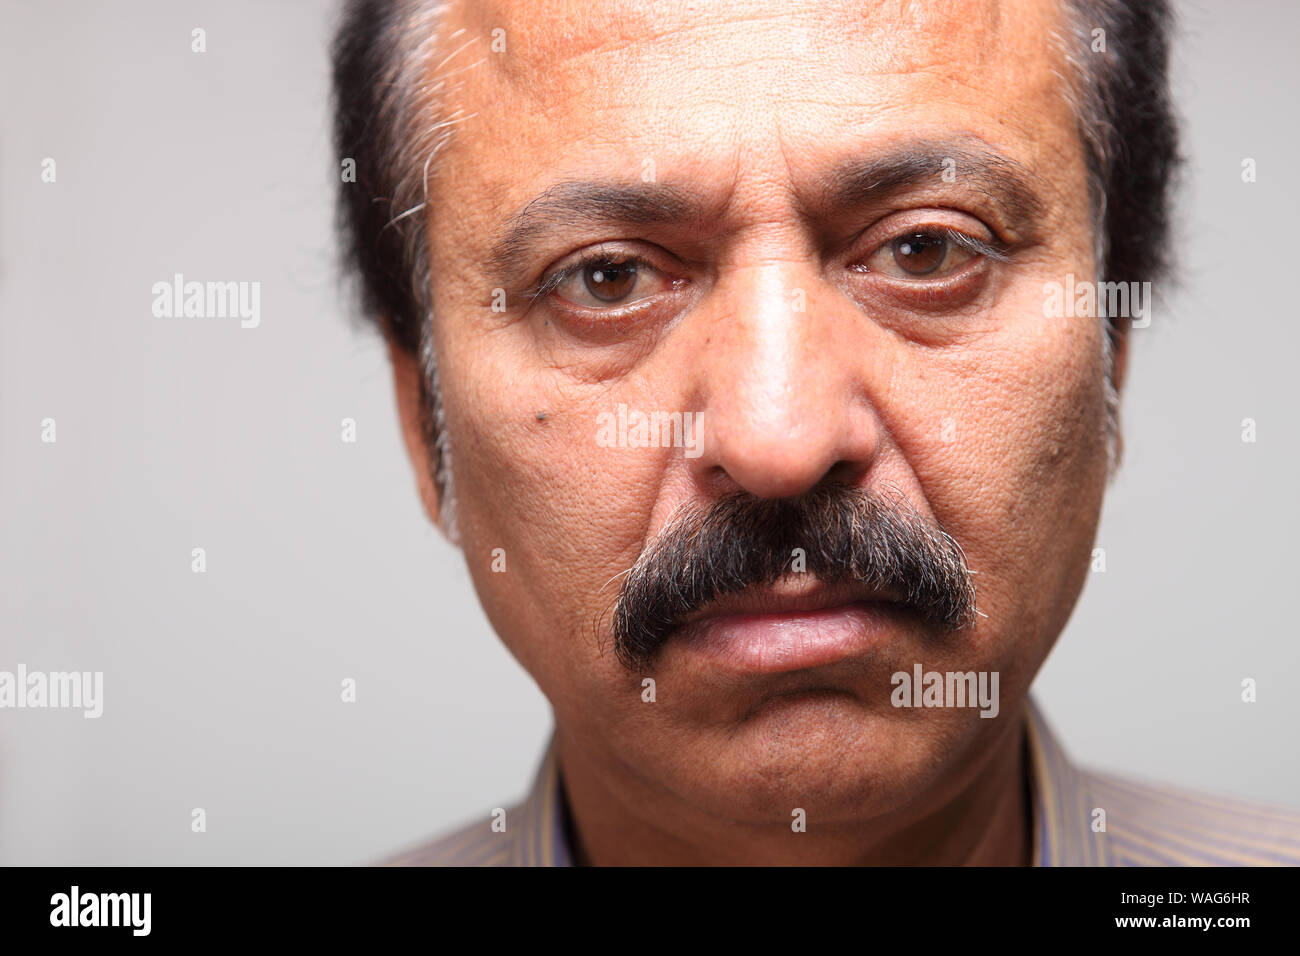 Old man looking sad Stock Photo